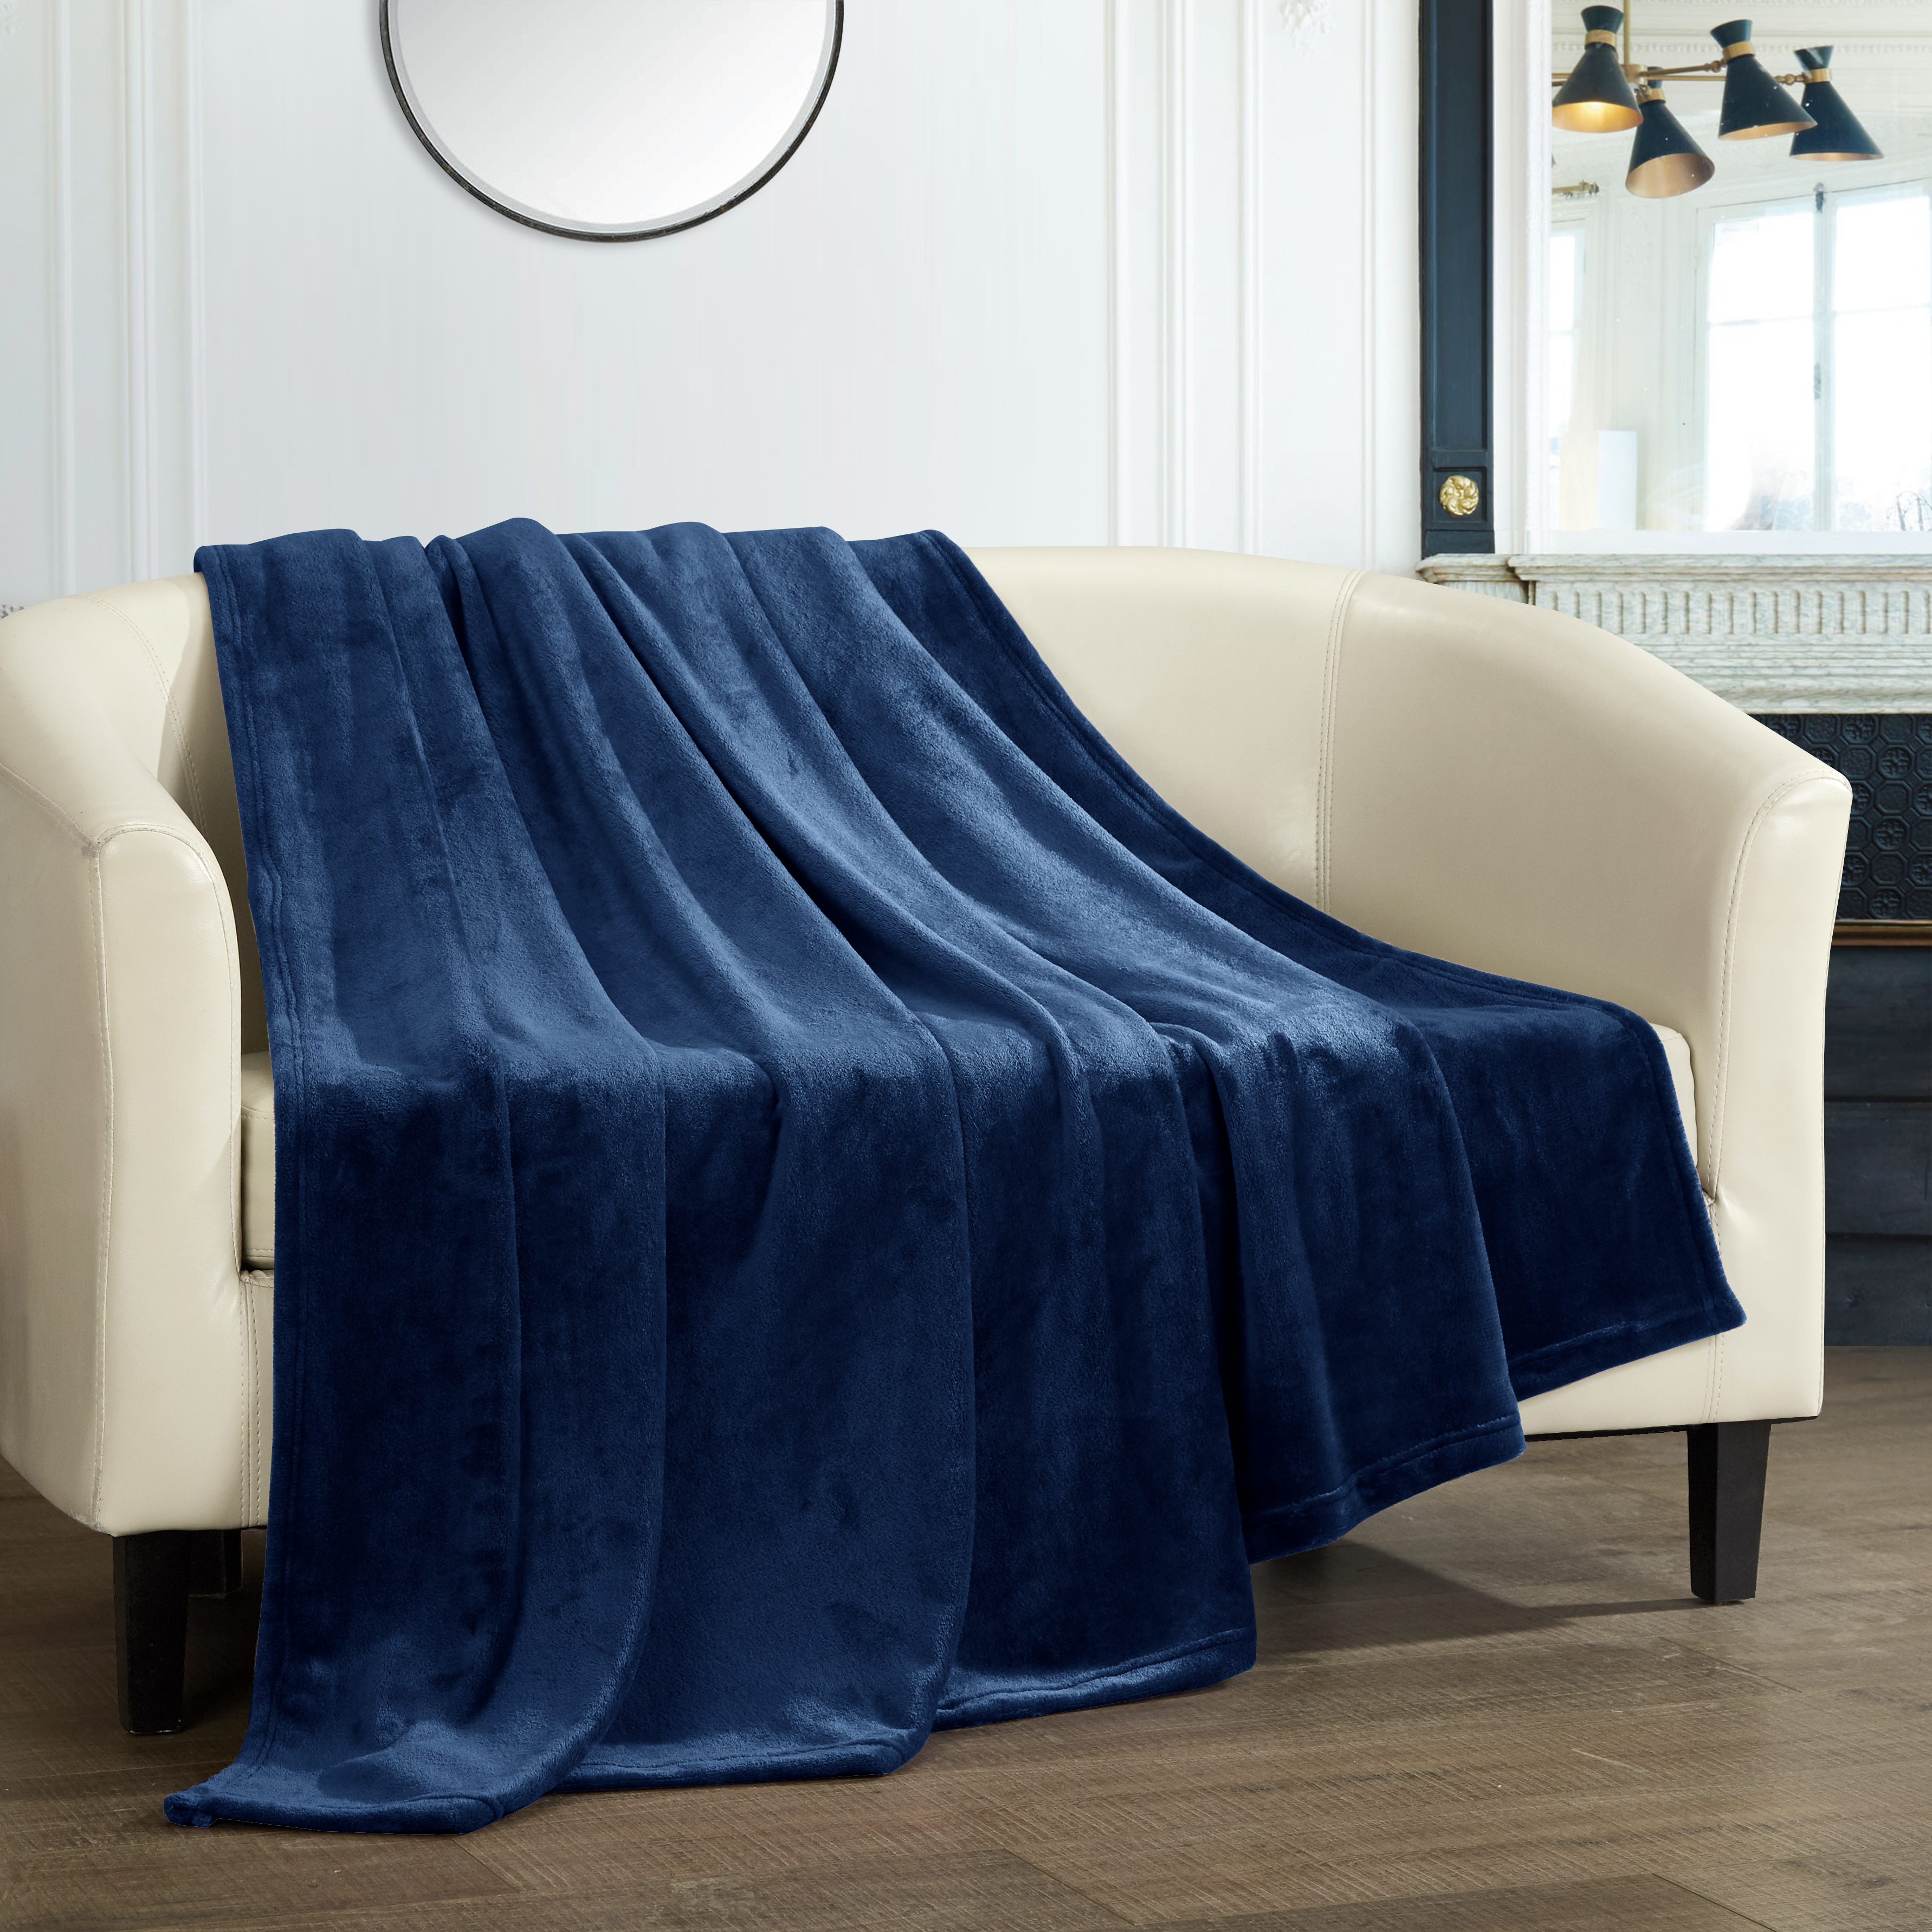 Kaeden Throw Blanket Cozy Super Soft Ultra Plush Micro Mink Fleece Decorative Design - Navy